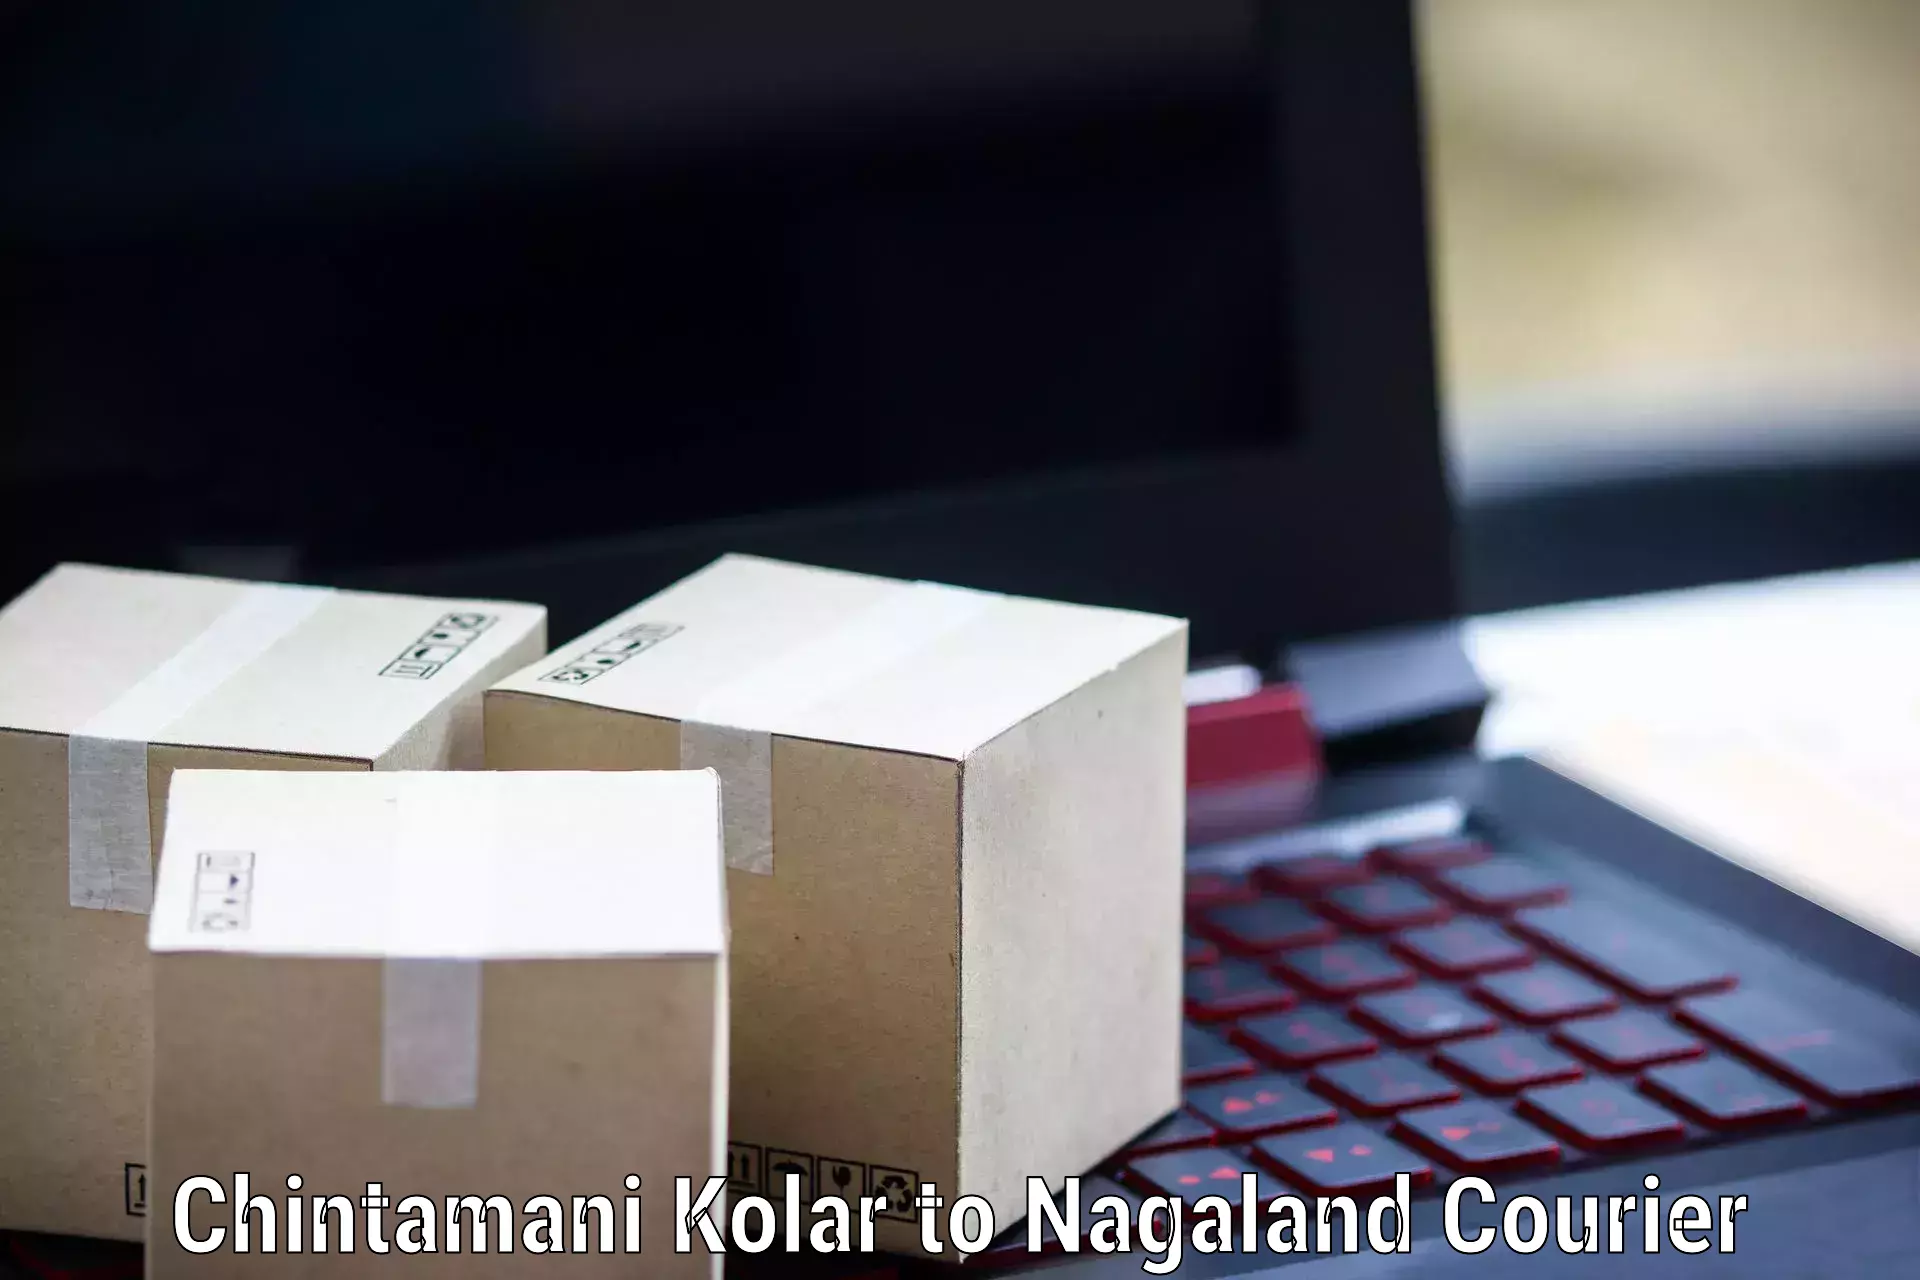 High-speed parcel service Chintamani Kolar to Nagaland